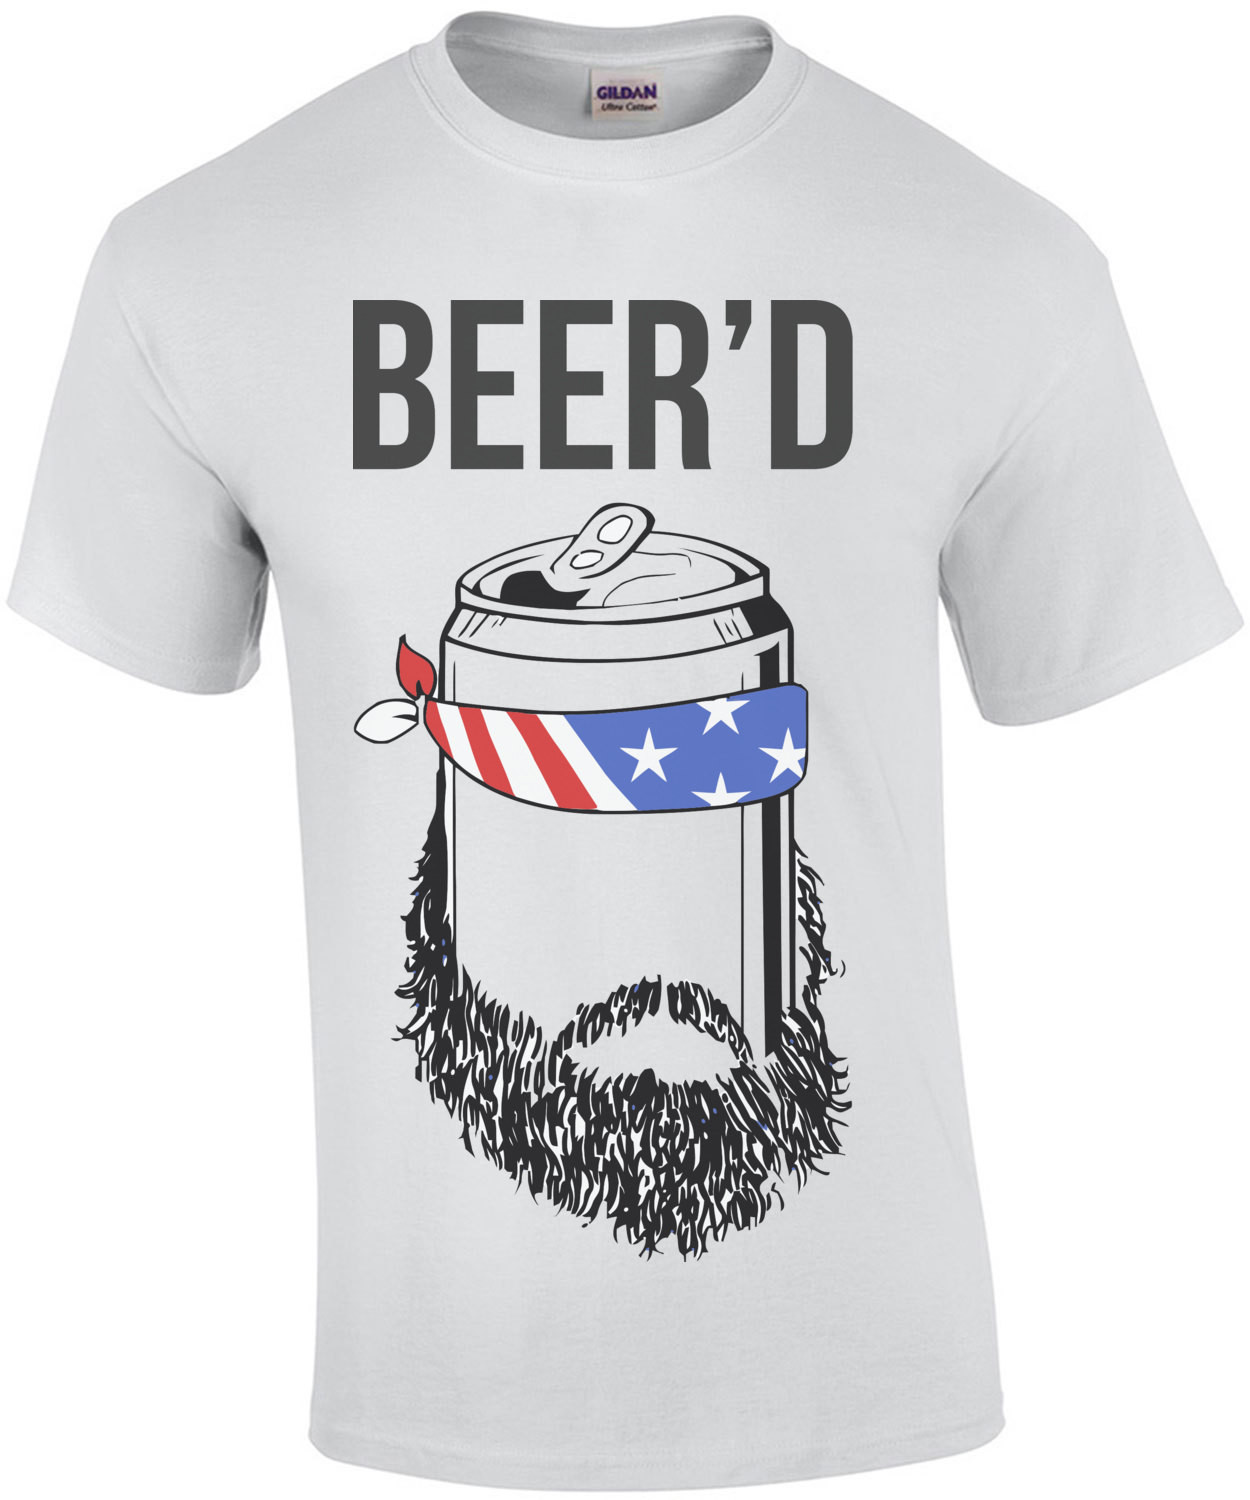 Beer'd Funny Shirt